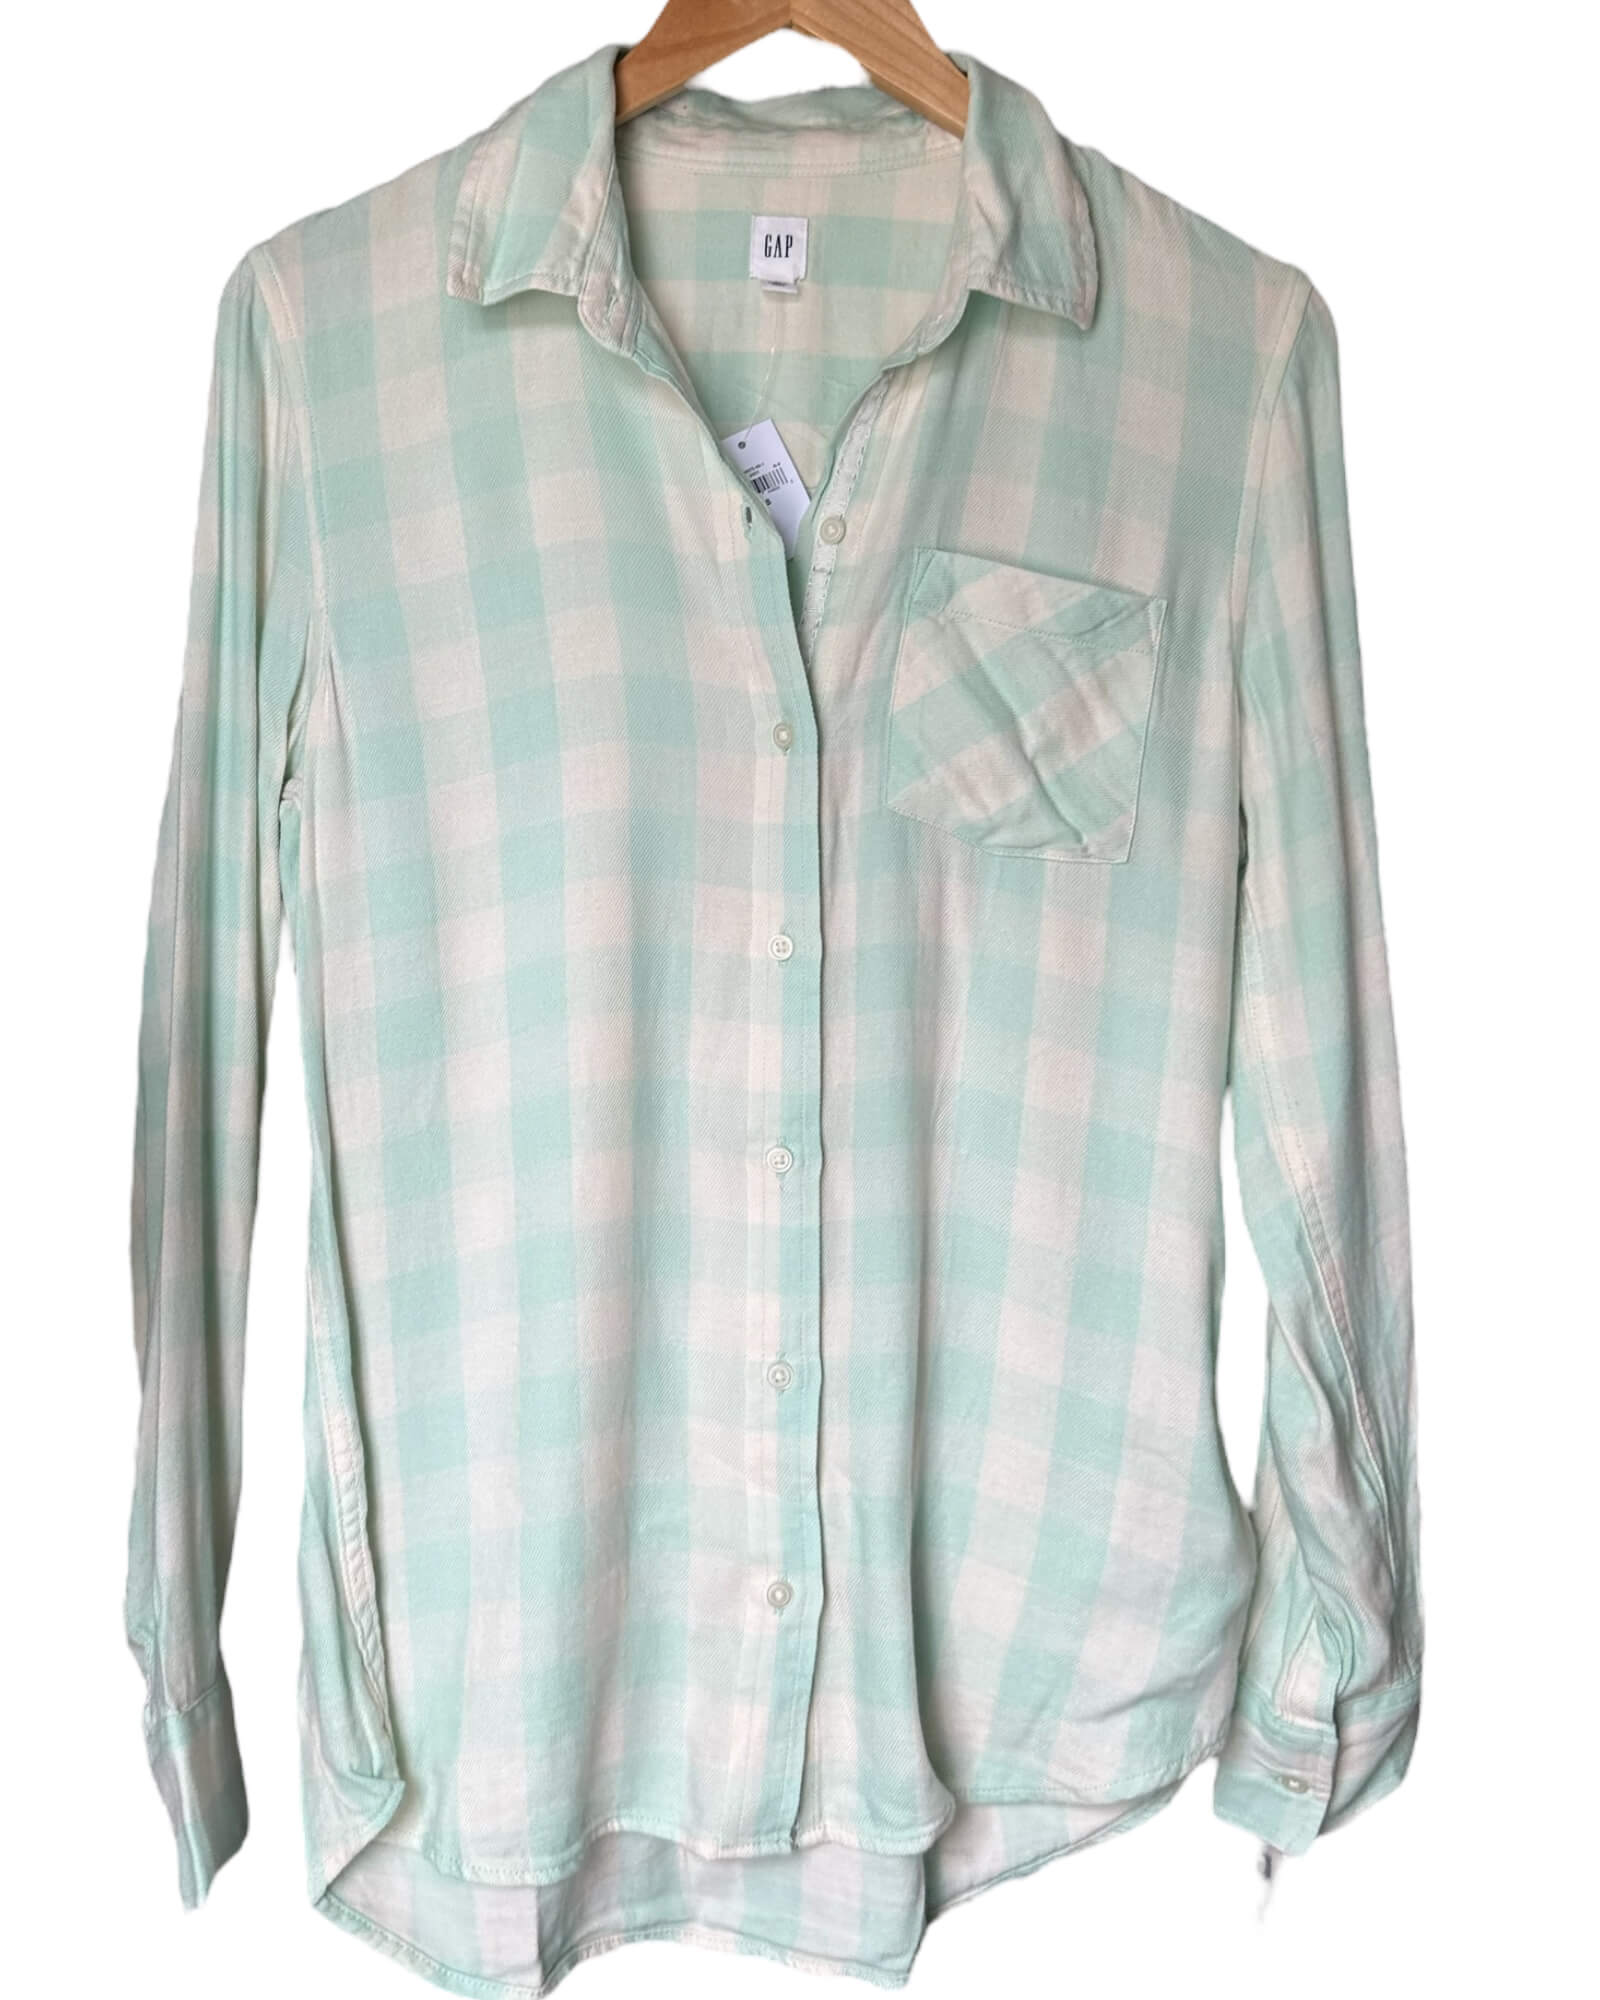 Soft Summer GAP mint plaid flannel shirt